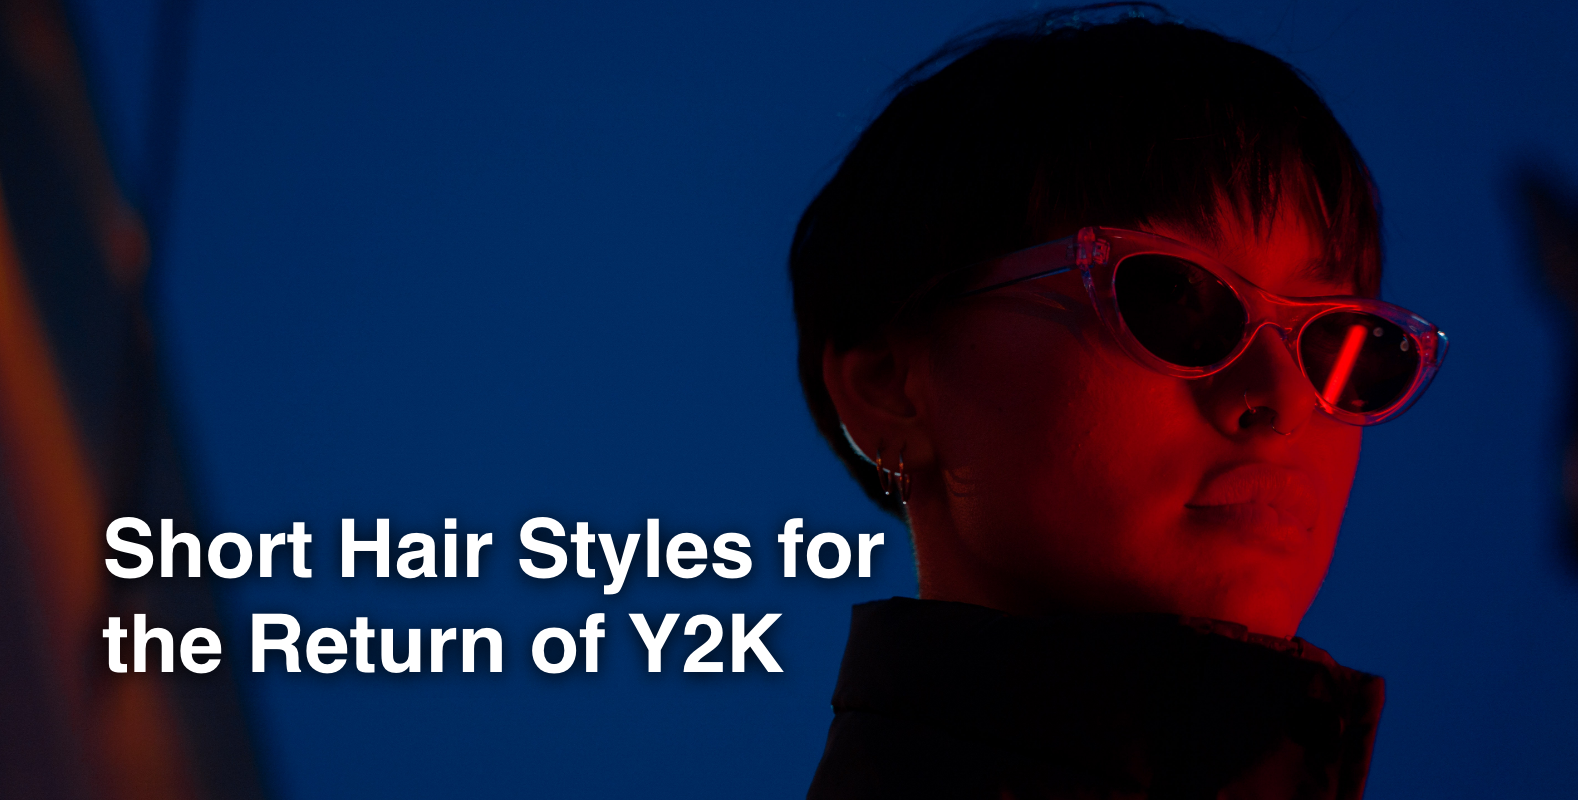 Short Hair Styles for the Return of Y2K